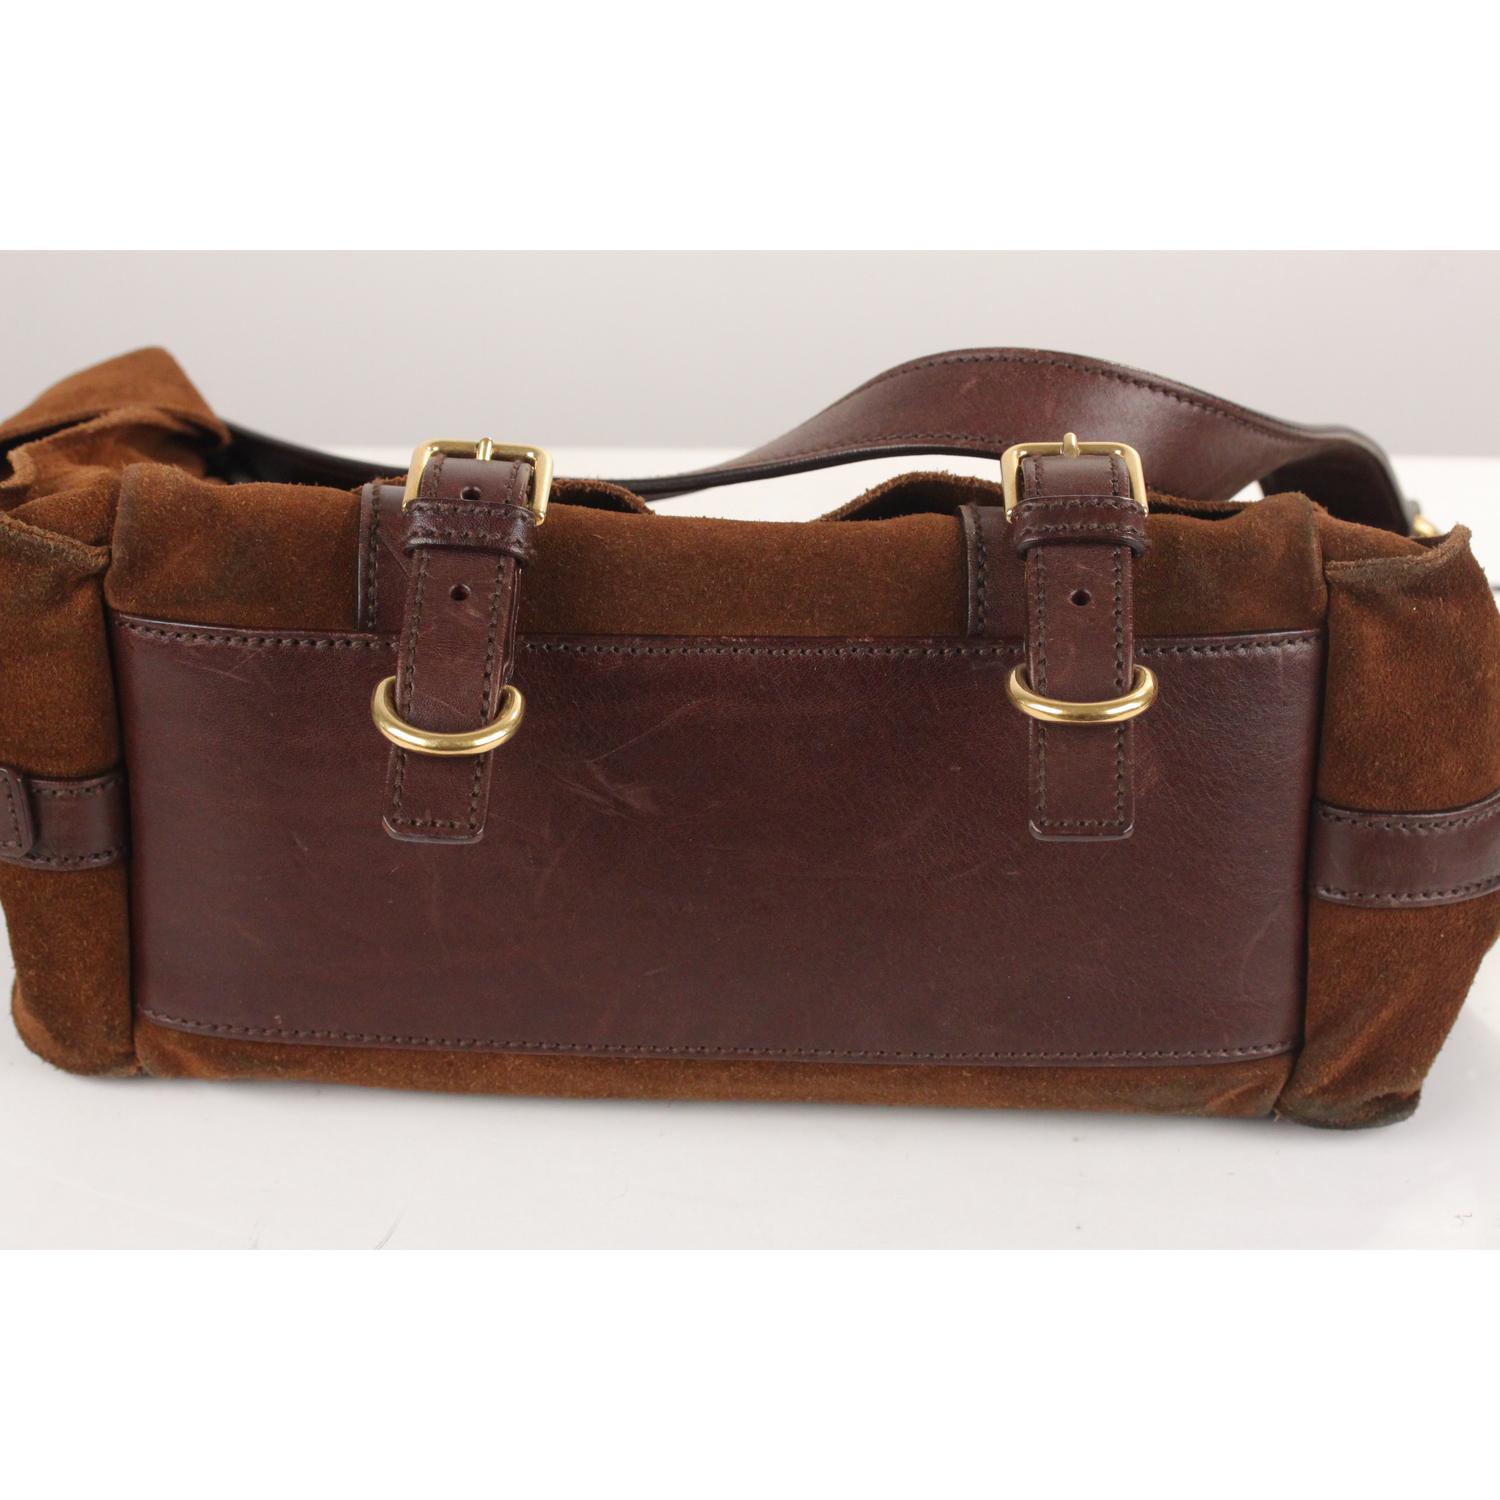 Yves Saint Laurent Brown Suede and Leather Shoulder Bag 2